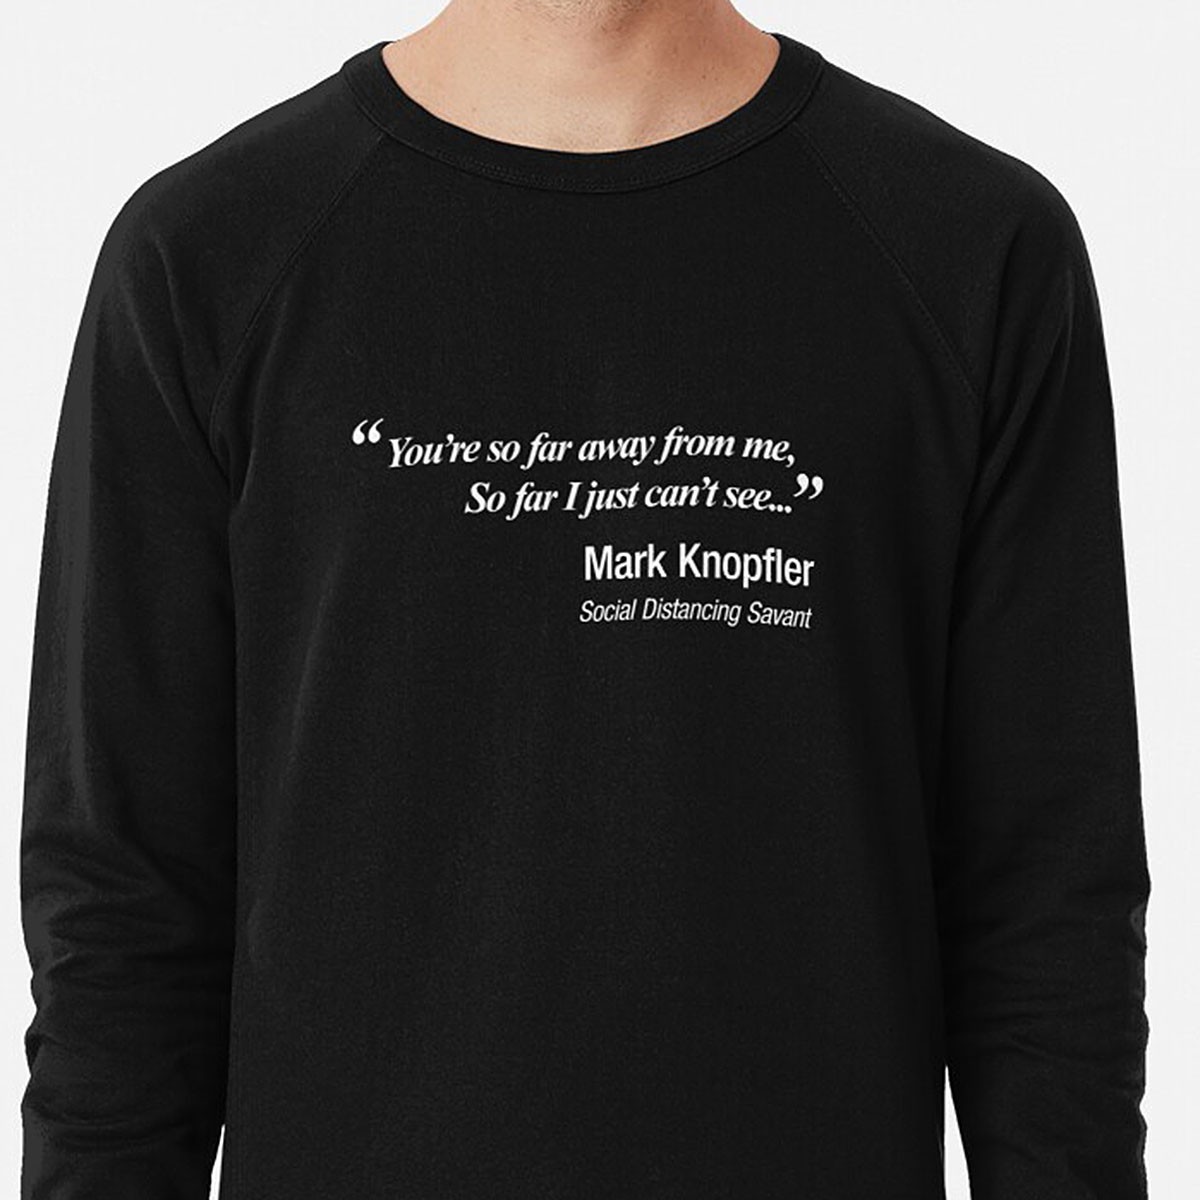 You're so far away from me - Dire Straits/ Mark Knopfler Parody Lightweight Sweatshirt by NTK Apparel